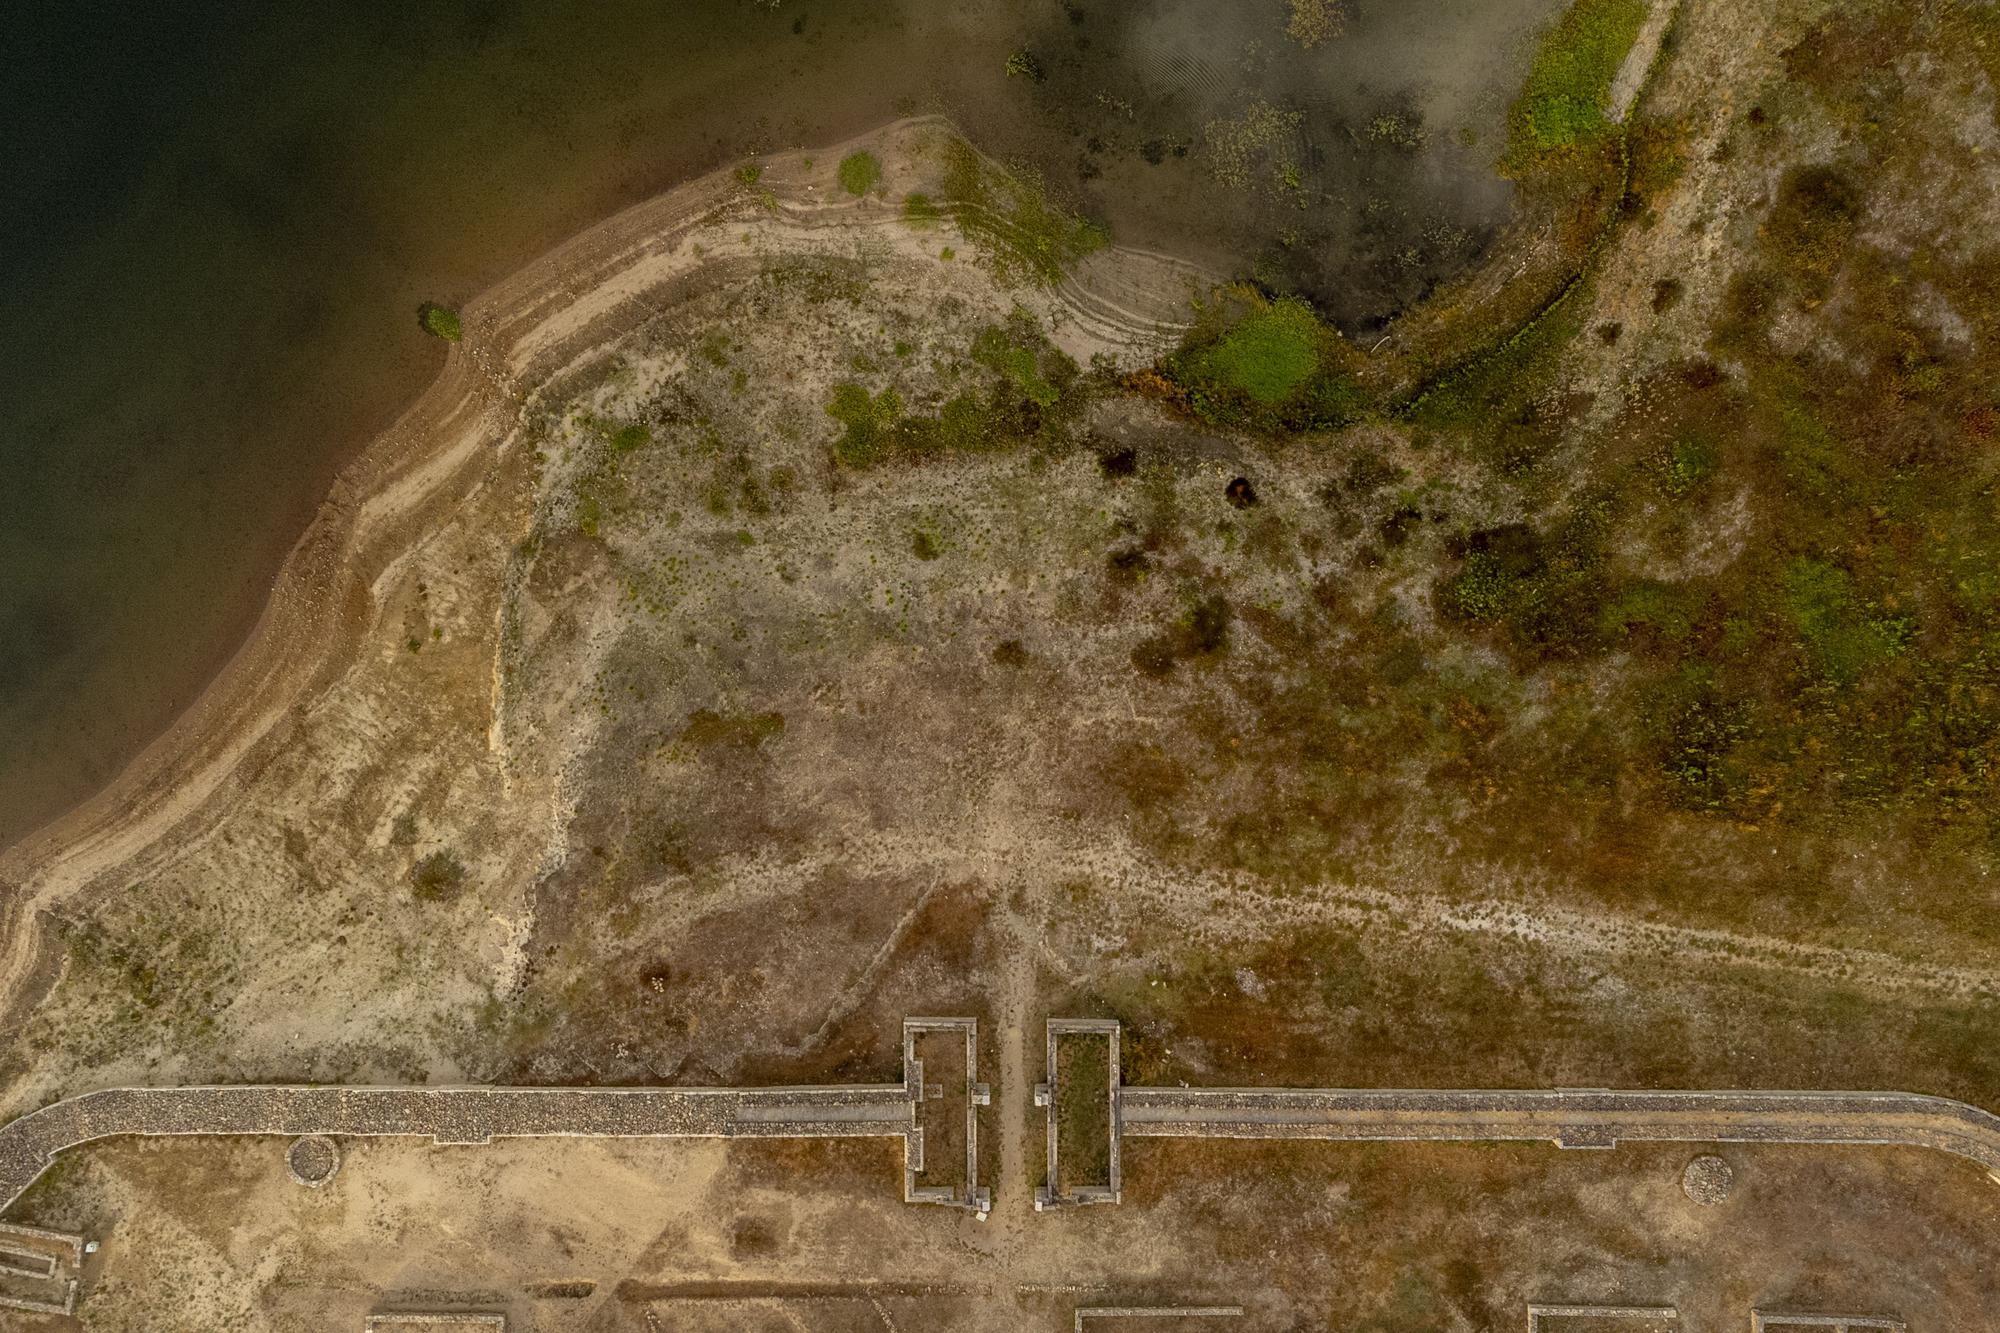 El campamento romano Aquis Querquennis, a vista de dron junto a un embalse semivacío